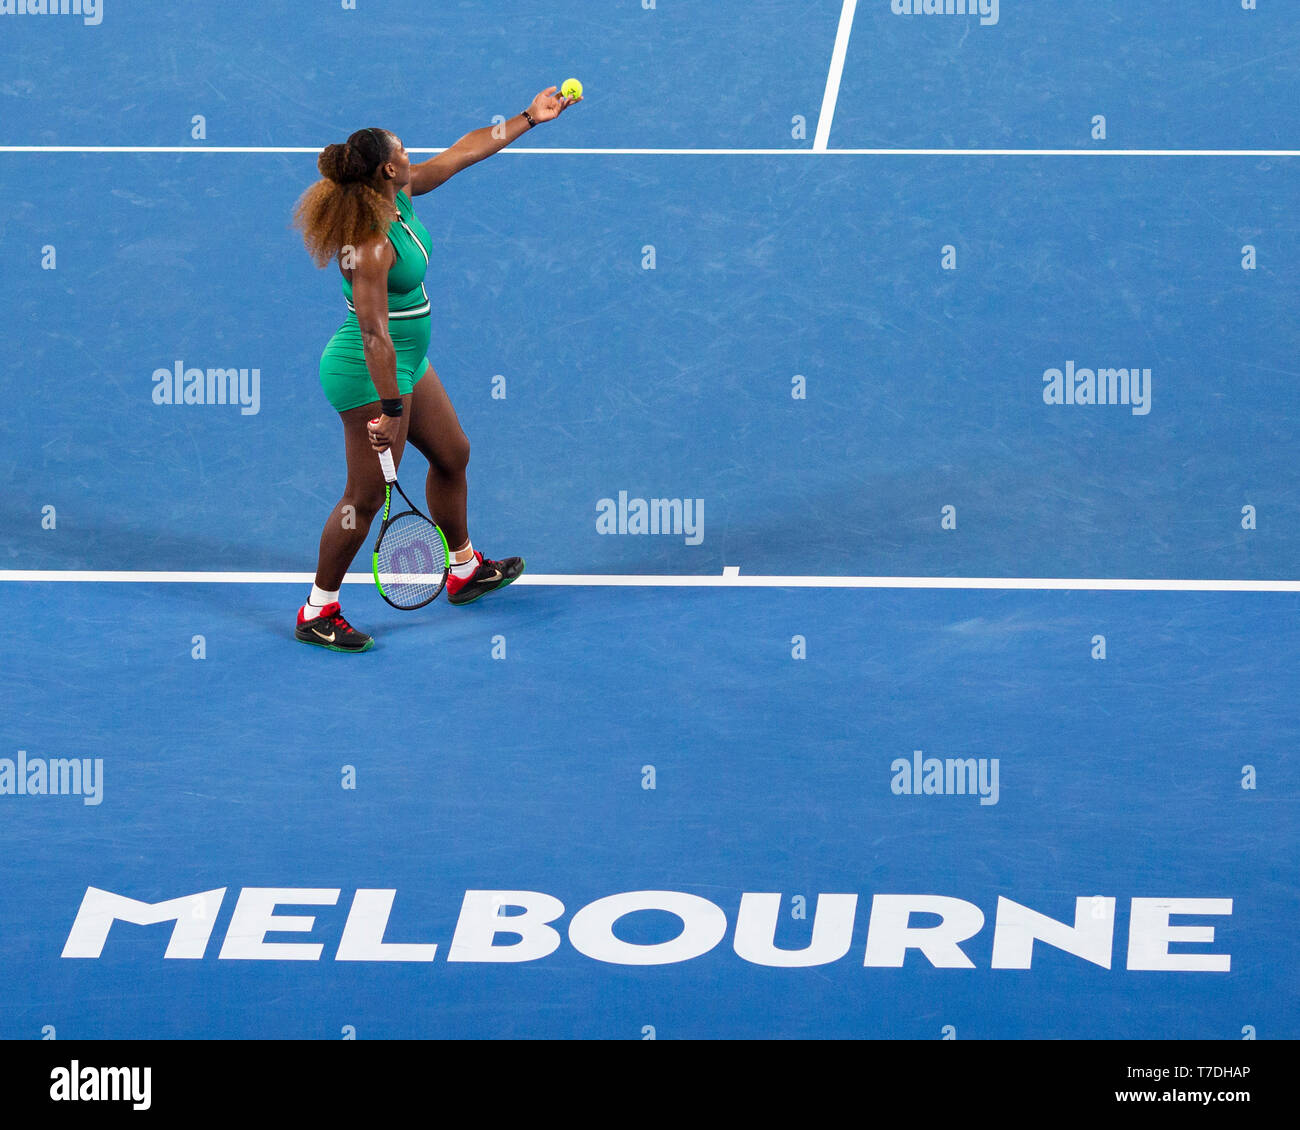 American tennis player Serena Williams serving in Australian Open 2019 tennis tournament, Melbourne Park, Melbourne, Victoria, Australia Stock Photo